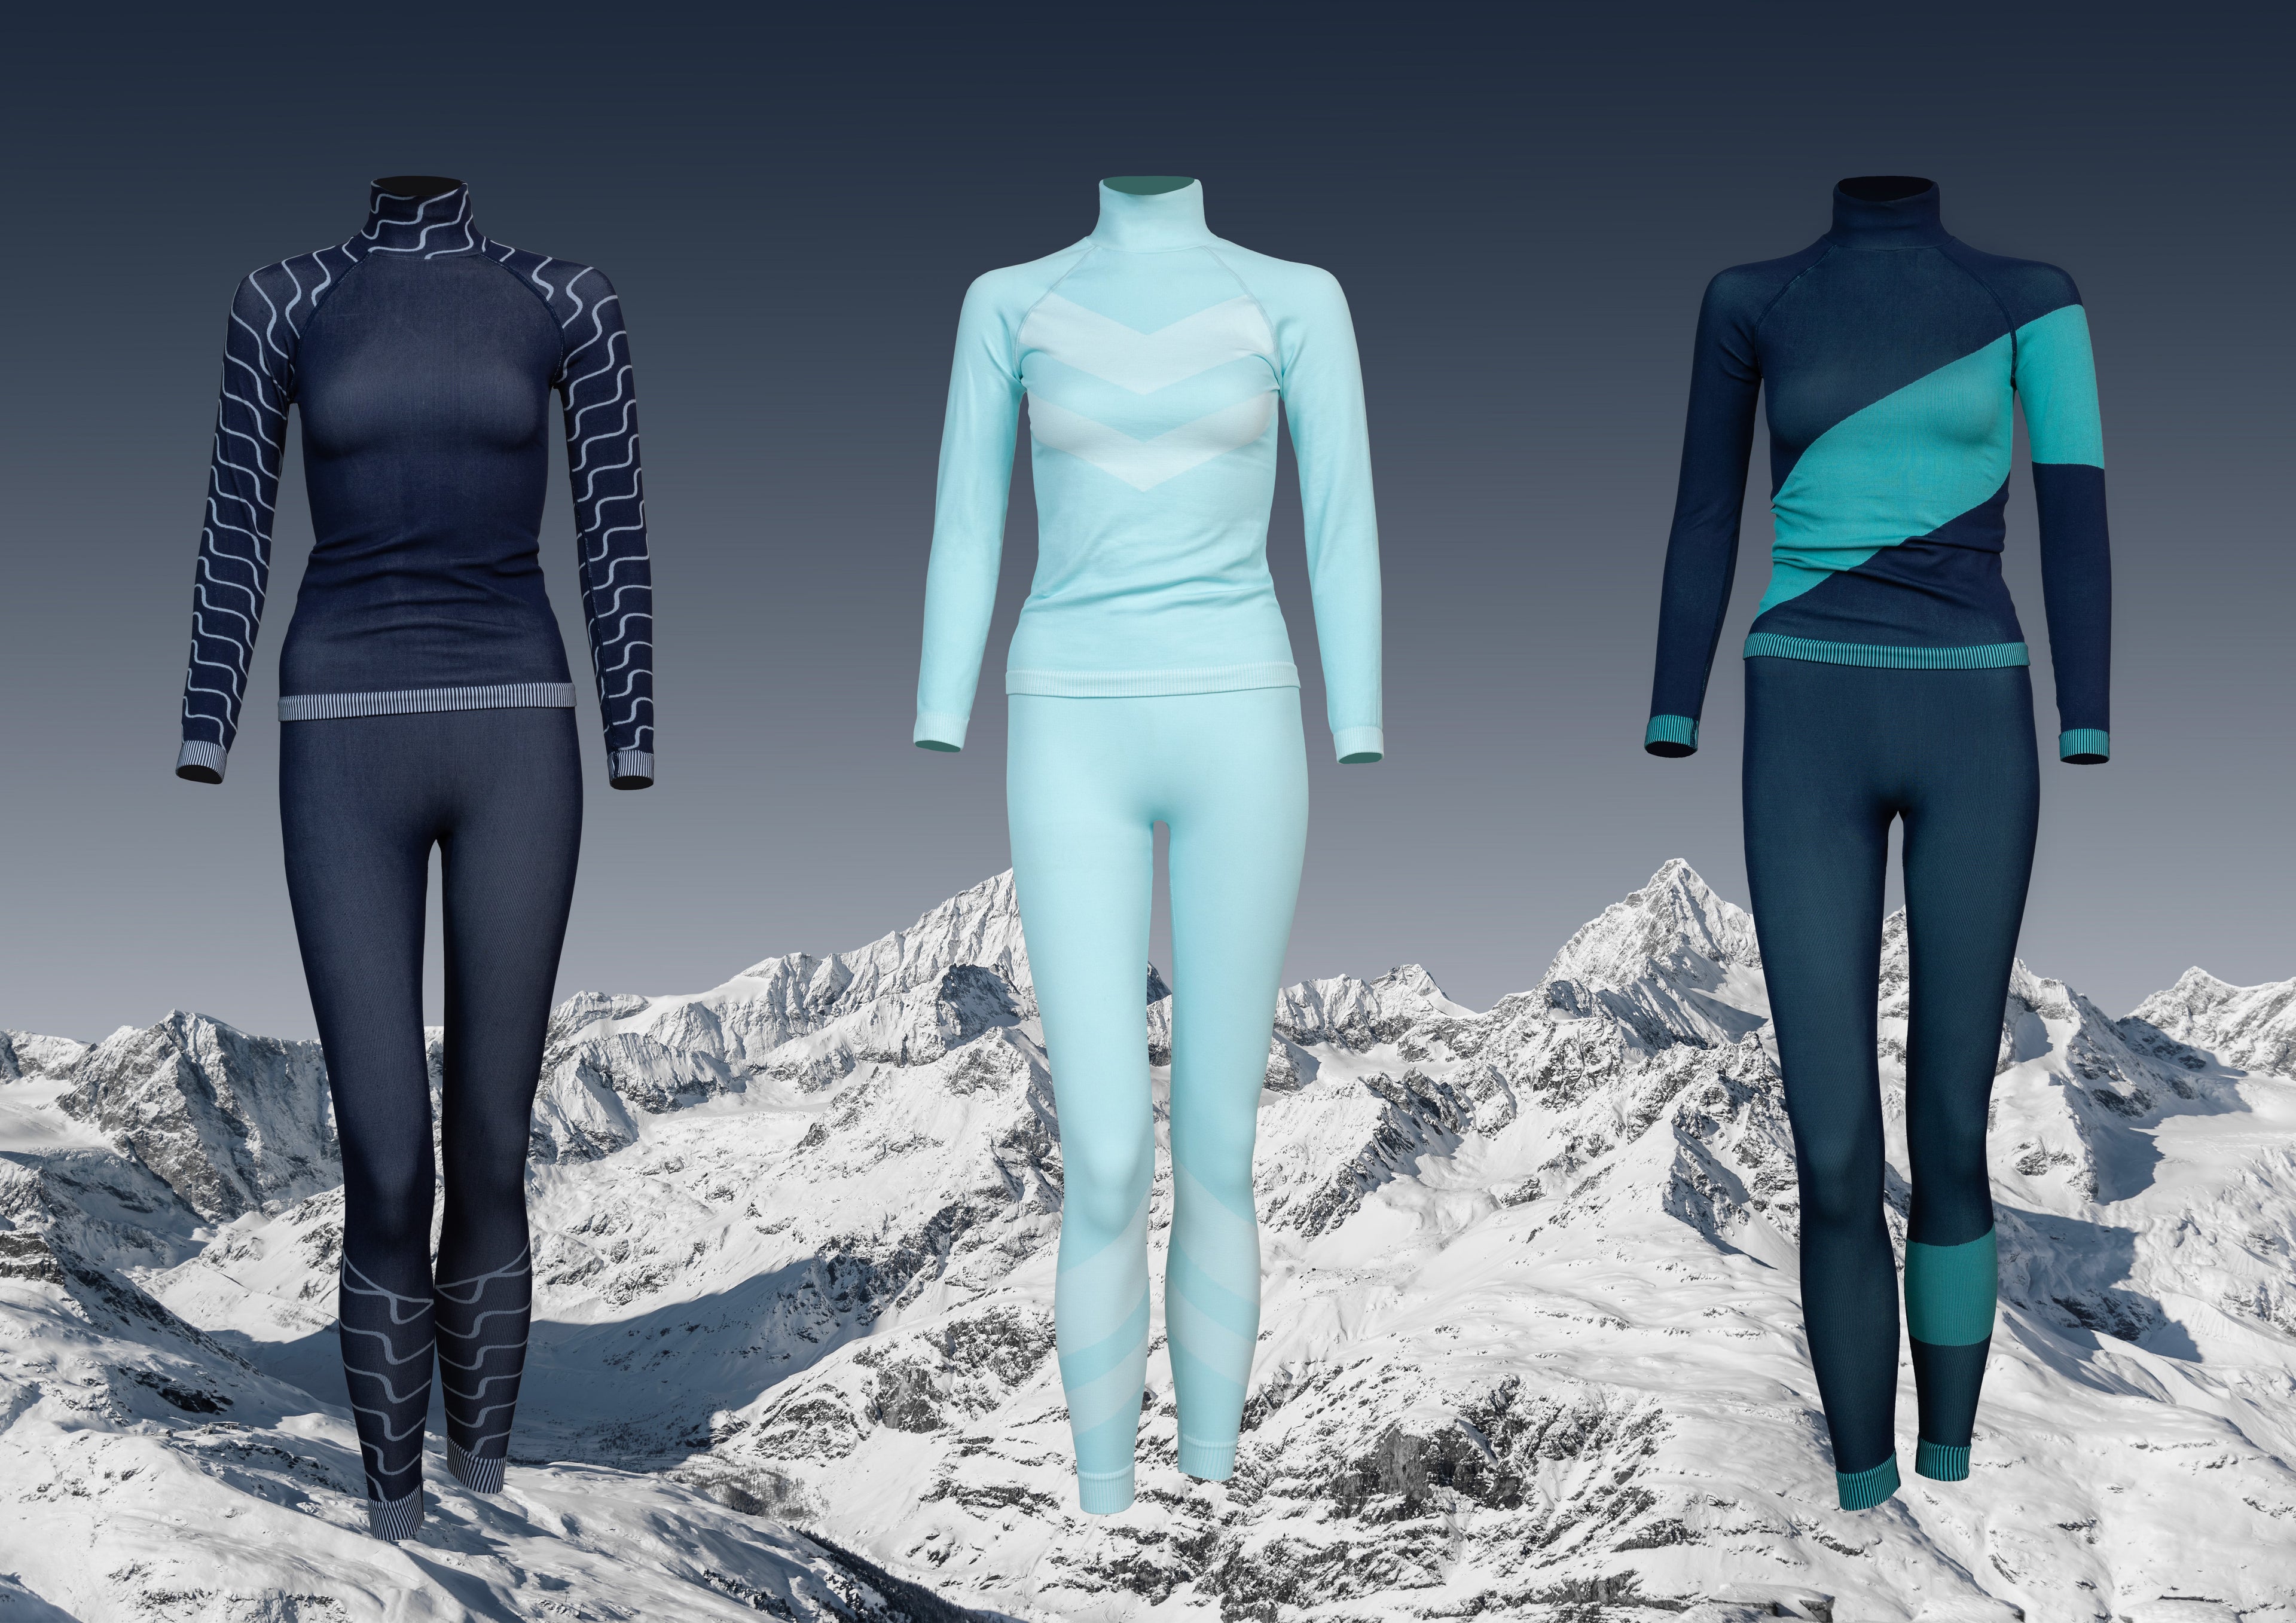 pretty impressive ❄️🍾⛷️ #skitok #apresski #sloobieskiwear #skigirlmat